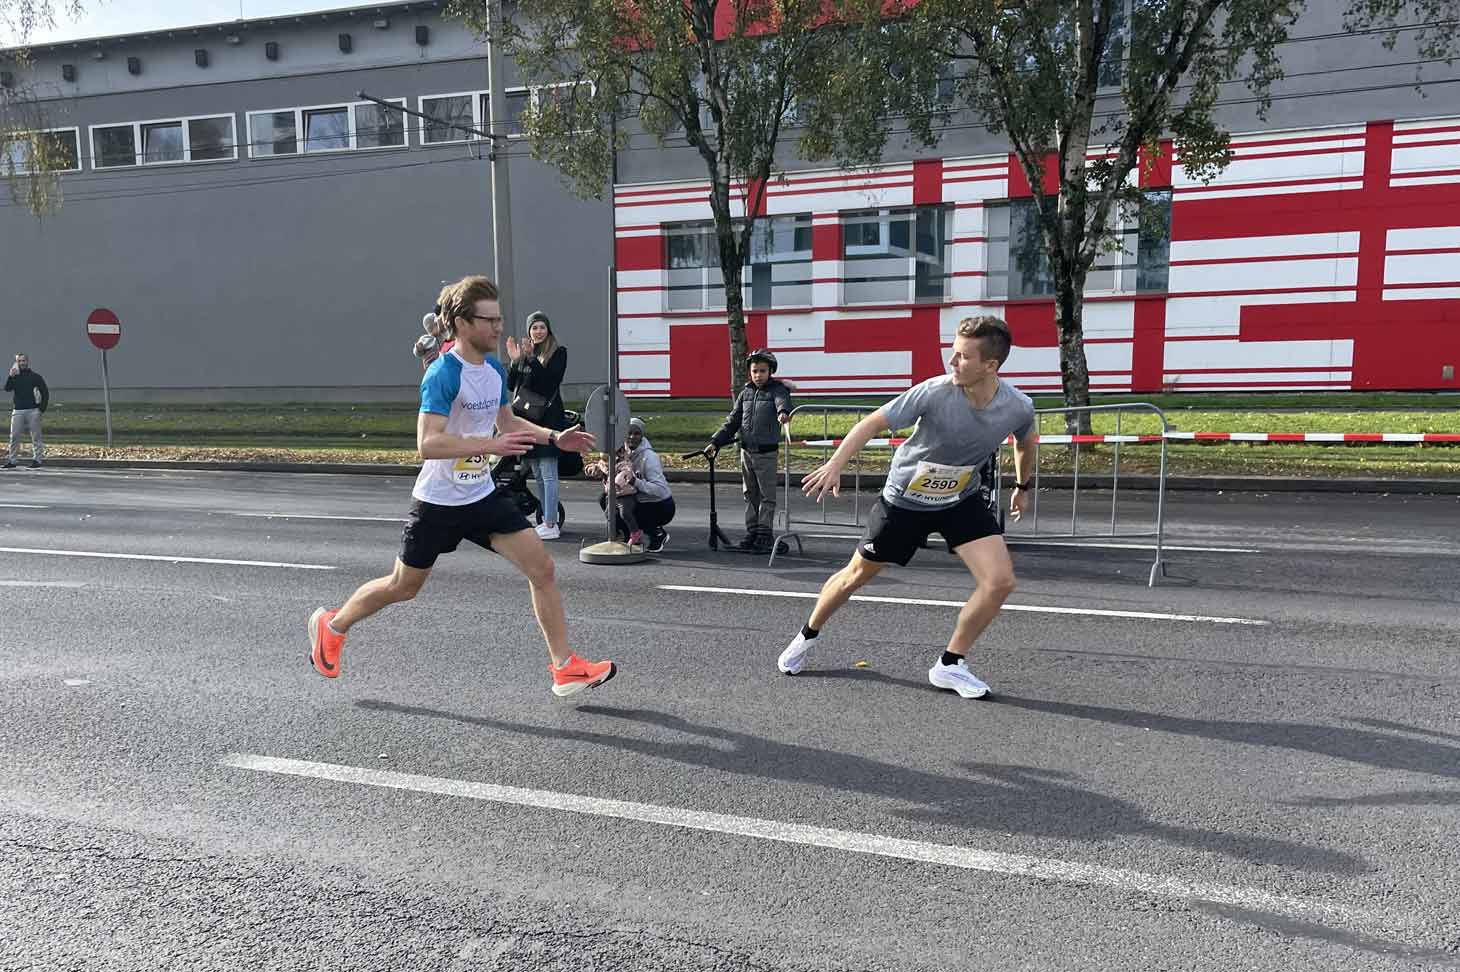 Florian hands over to the next runner at the Vienna Cit Marathon relay run